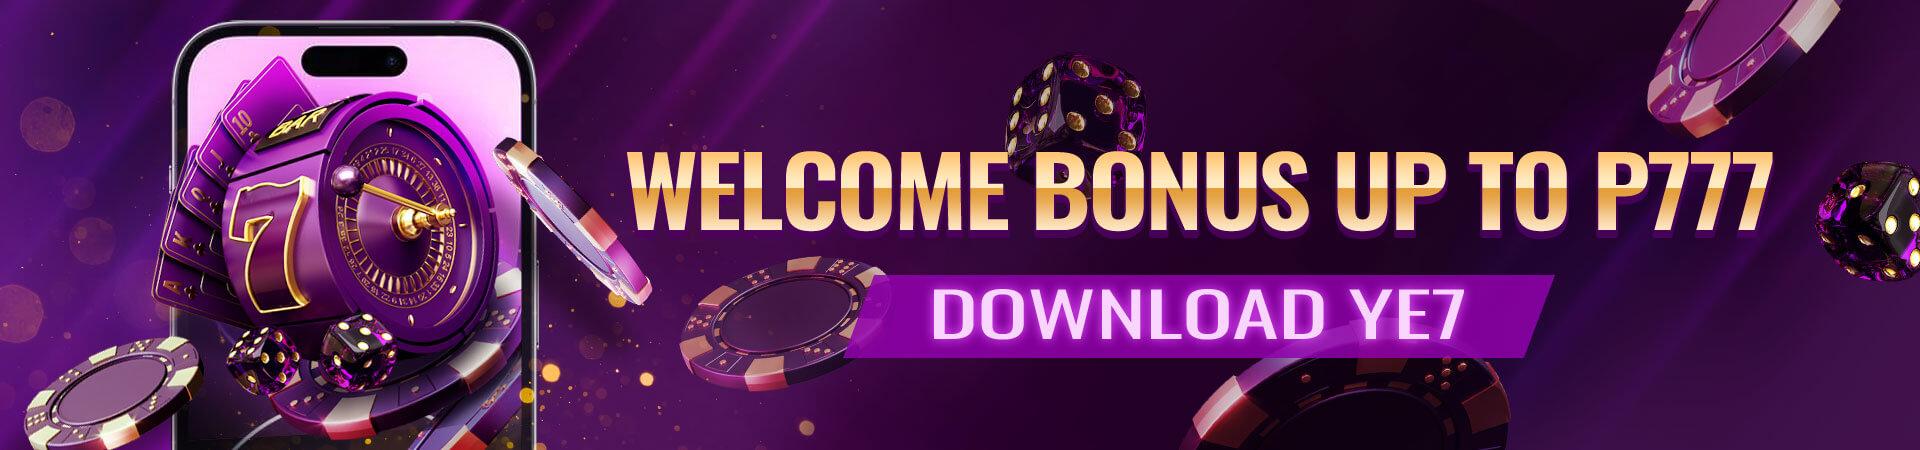 YE7-Welcome-Bonus.jpg